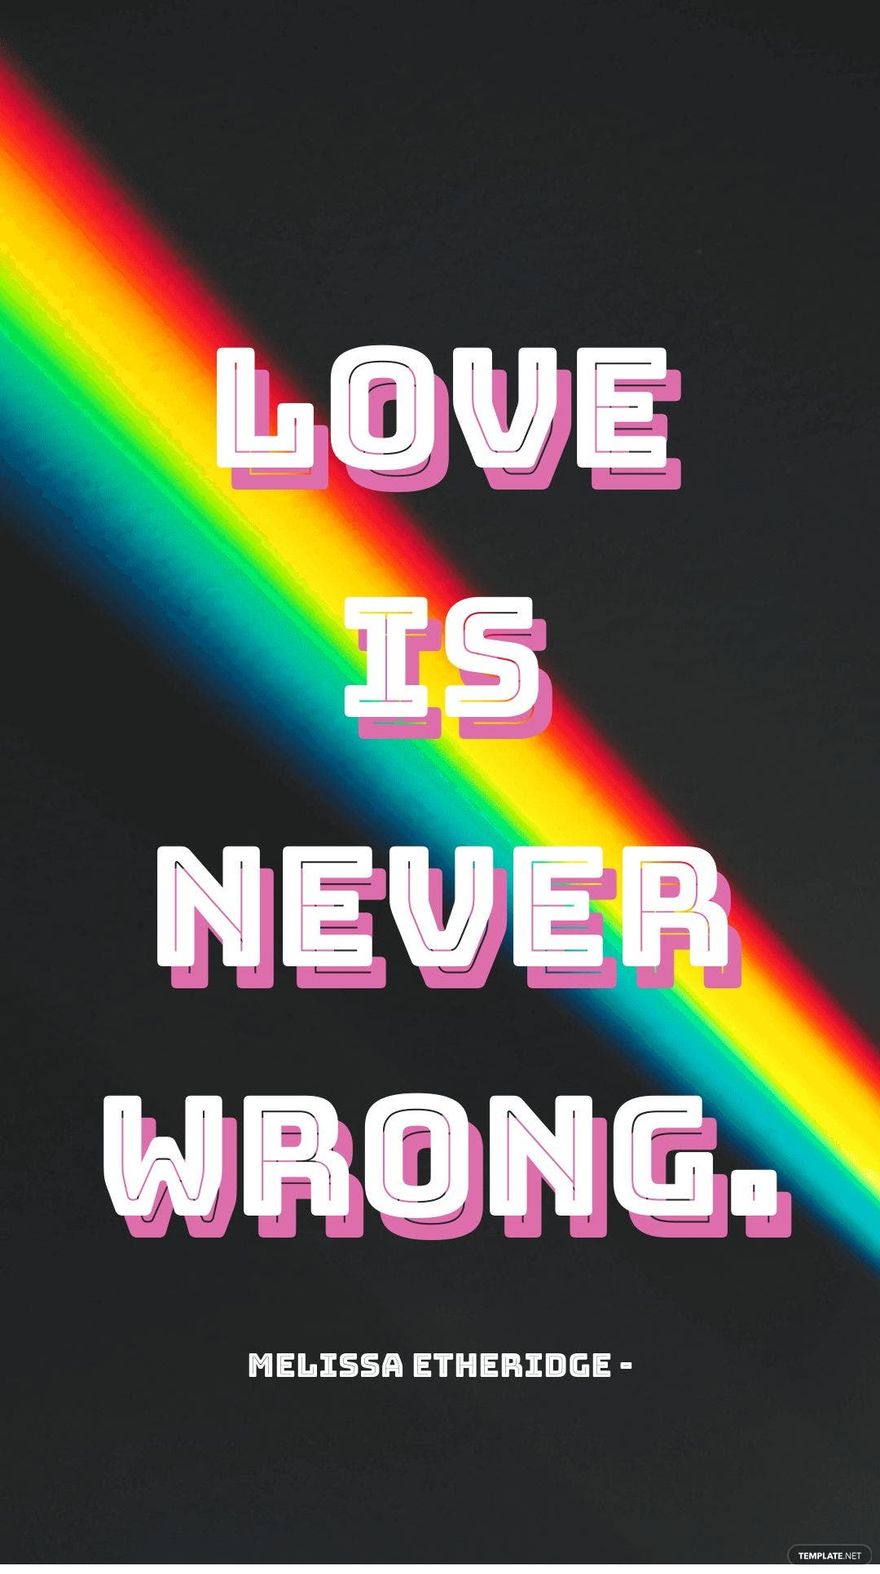 Melissa Etheridge - Love is never wrong. in JPG